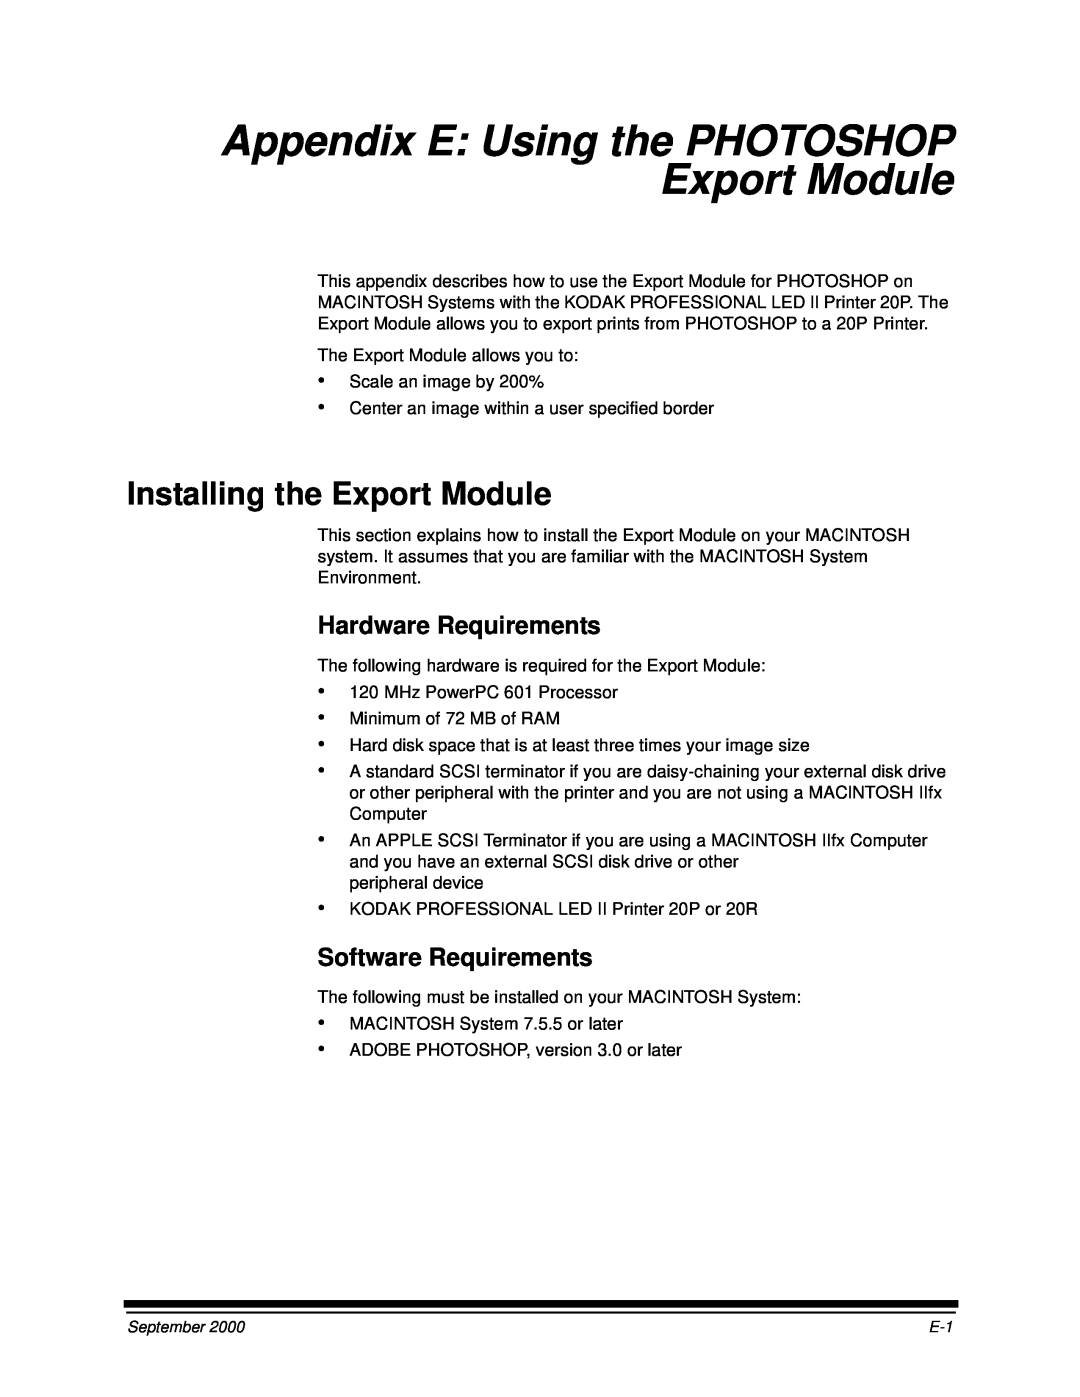 Kodak 20R manual Appendix E Using the PHOTOSHOP Export Module, Installing the Export Module, Hardware Requirements 